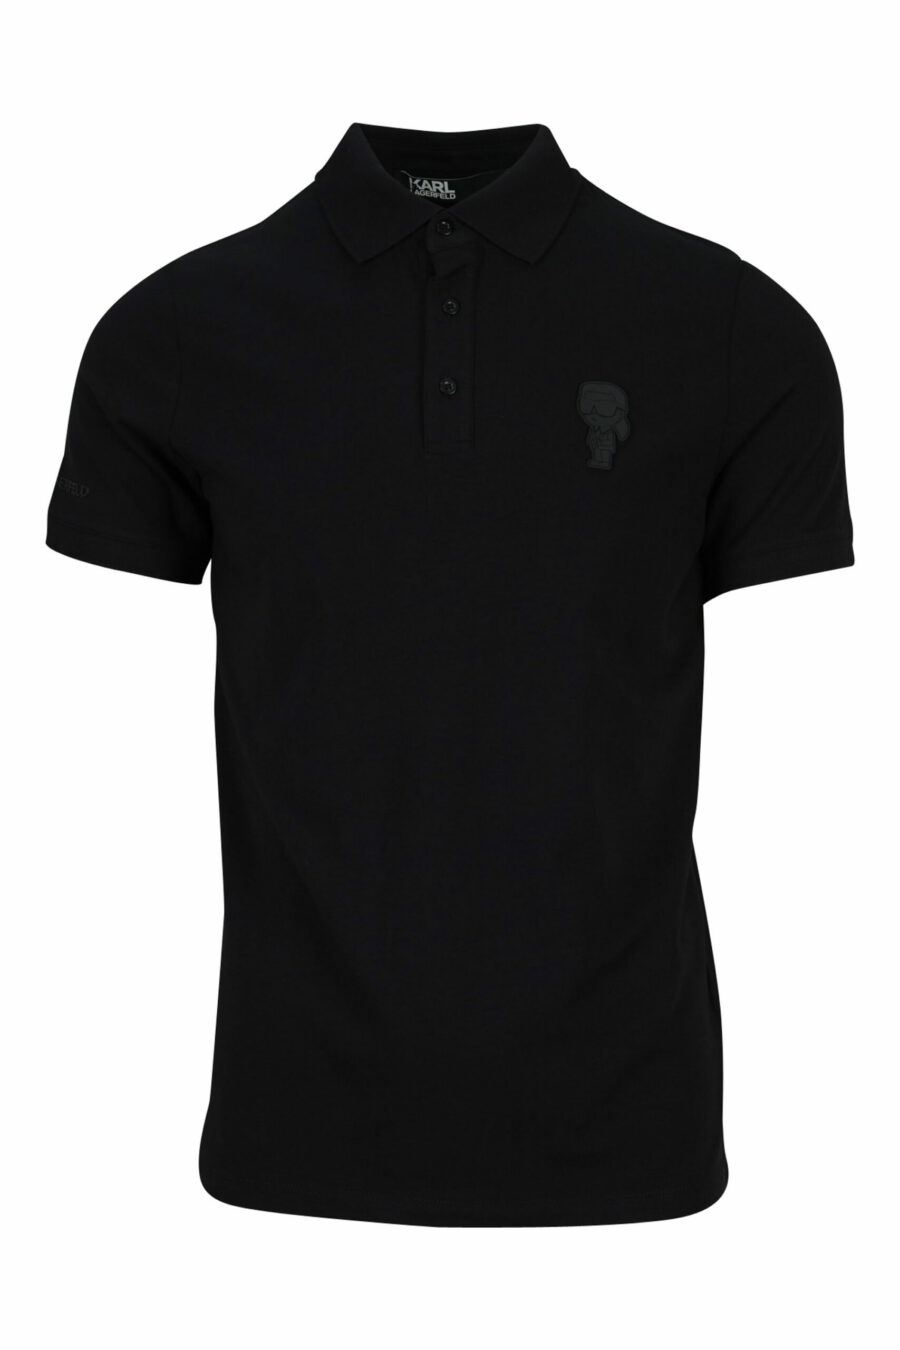 Black polo shirt with monochrome mini-logo - 4062226398633 scaled